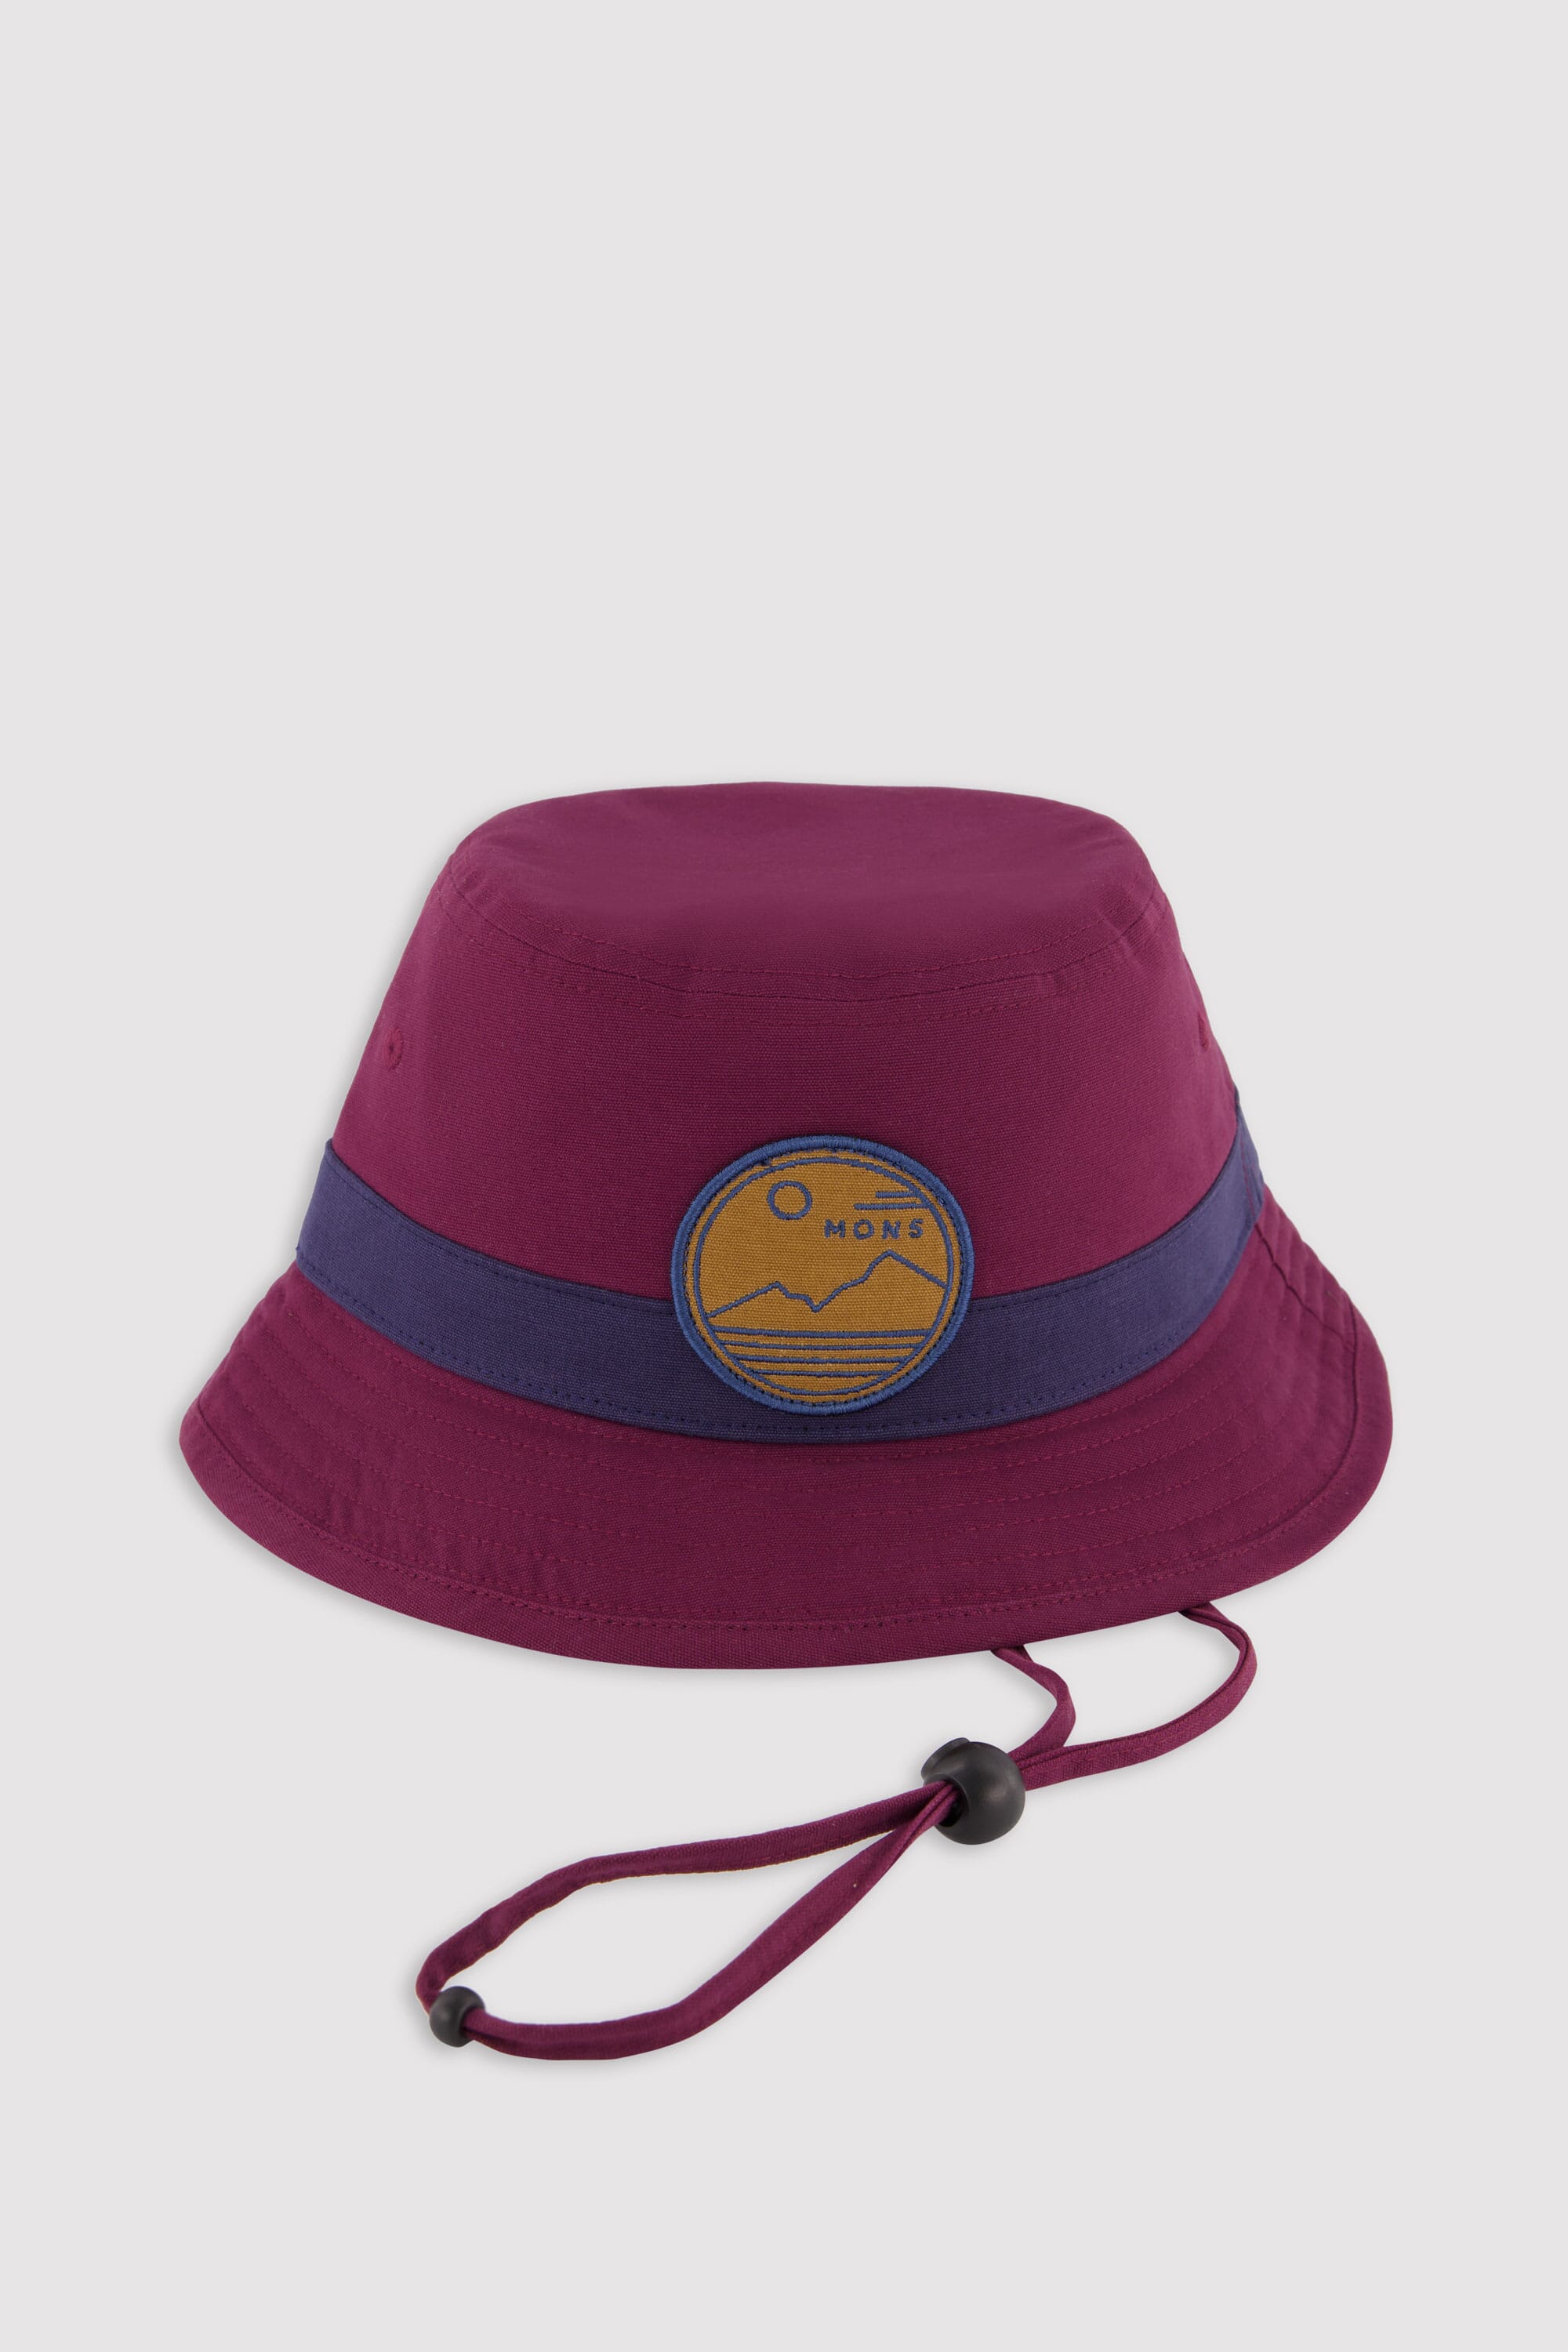 Mons Bucket Hat